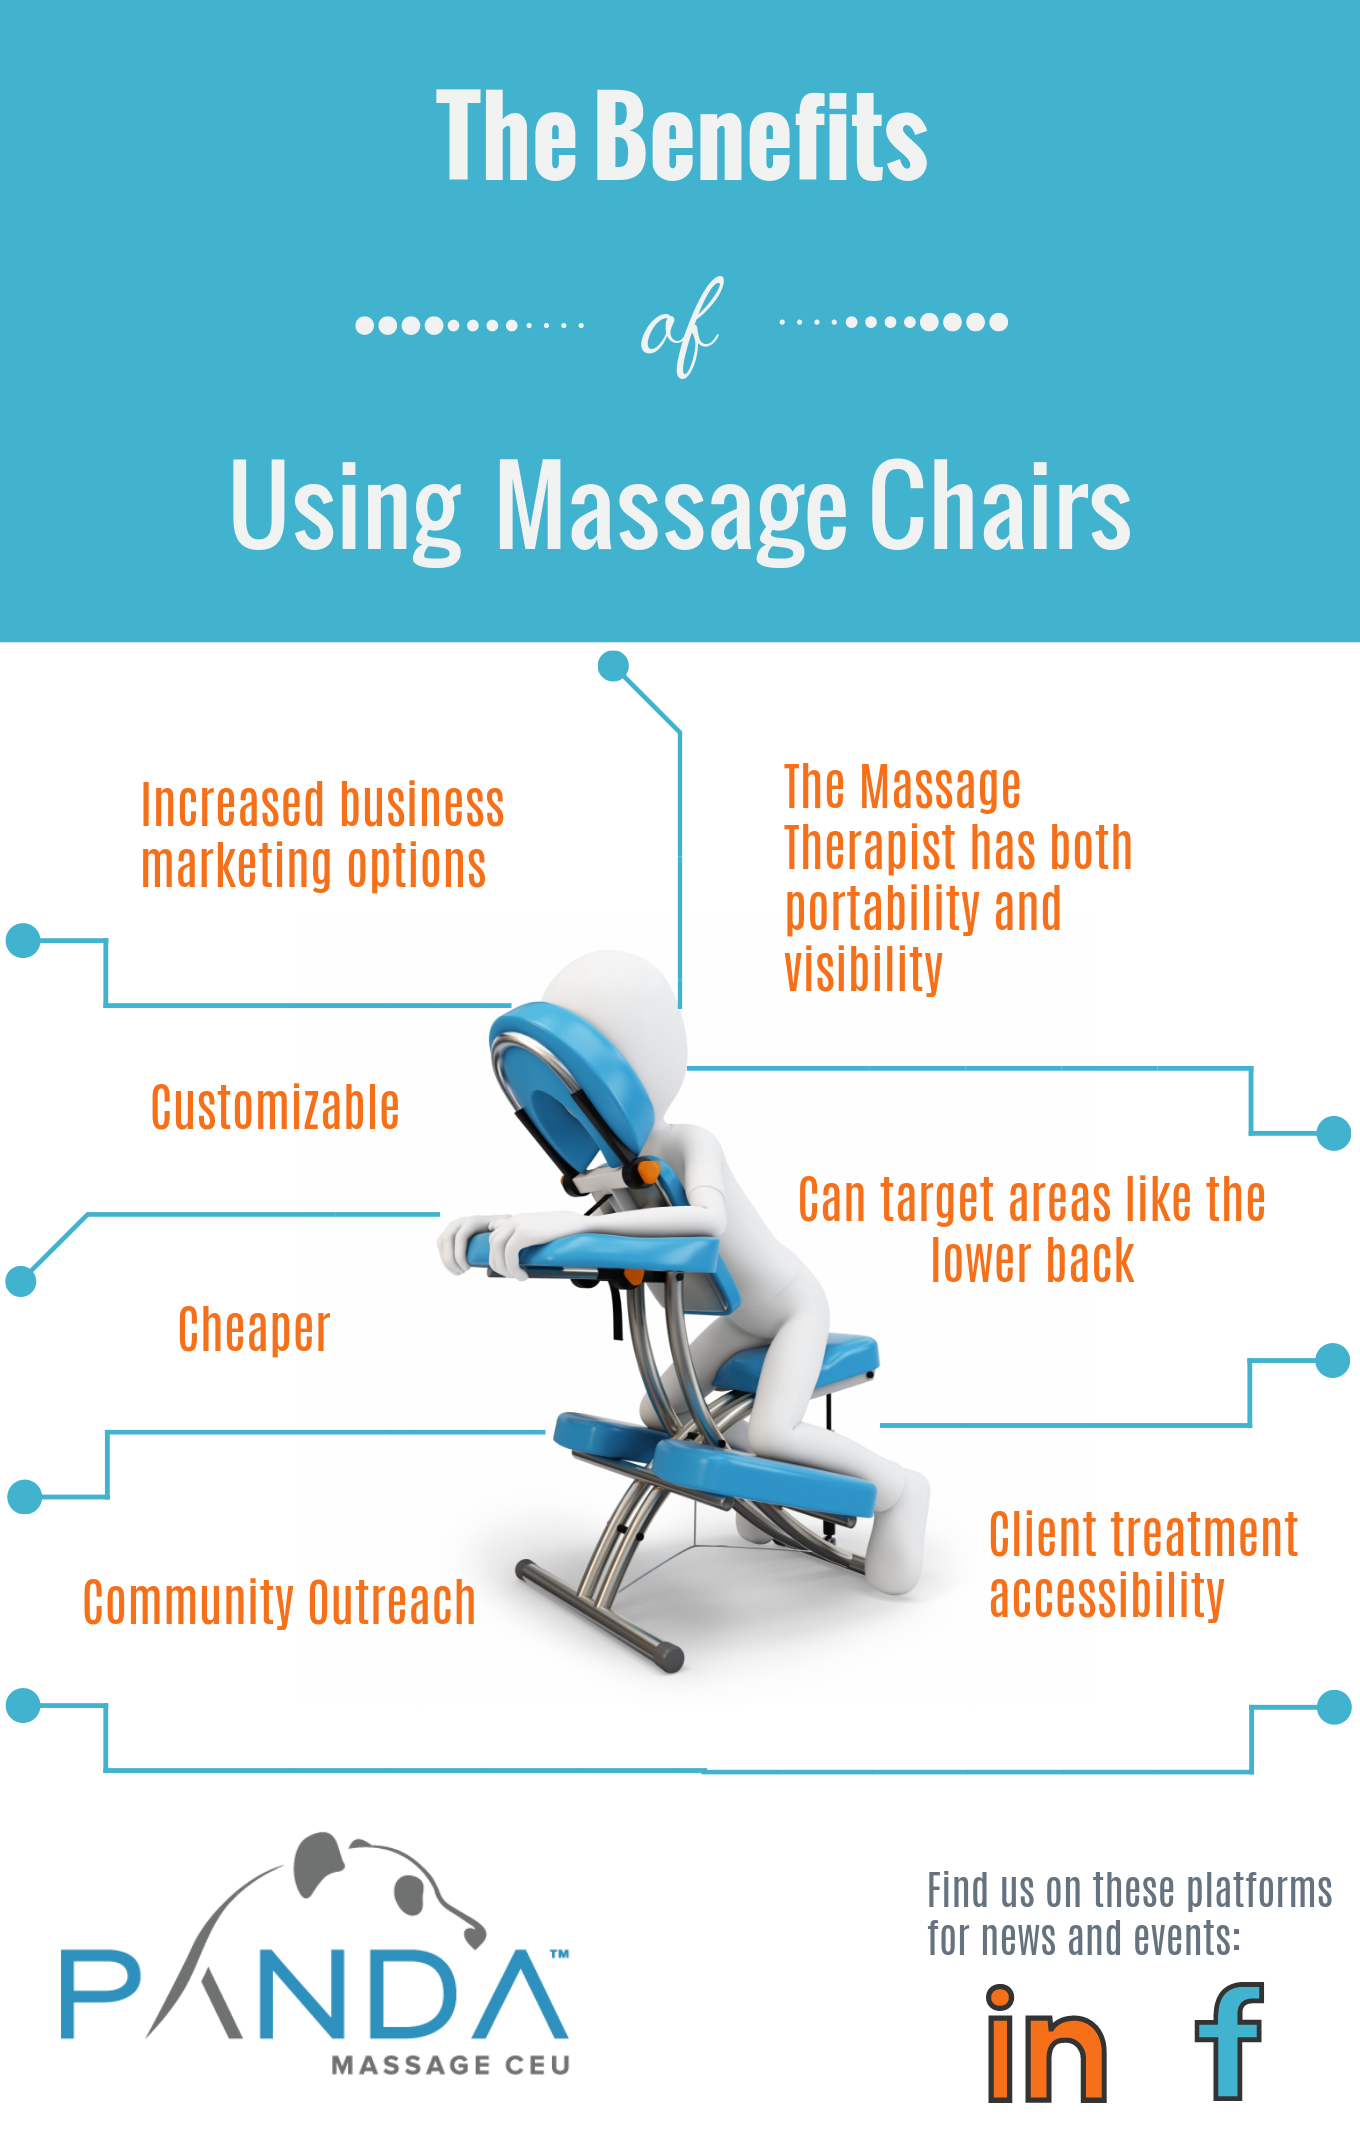 Massage Chair Singapore